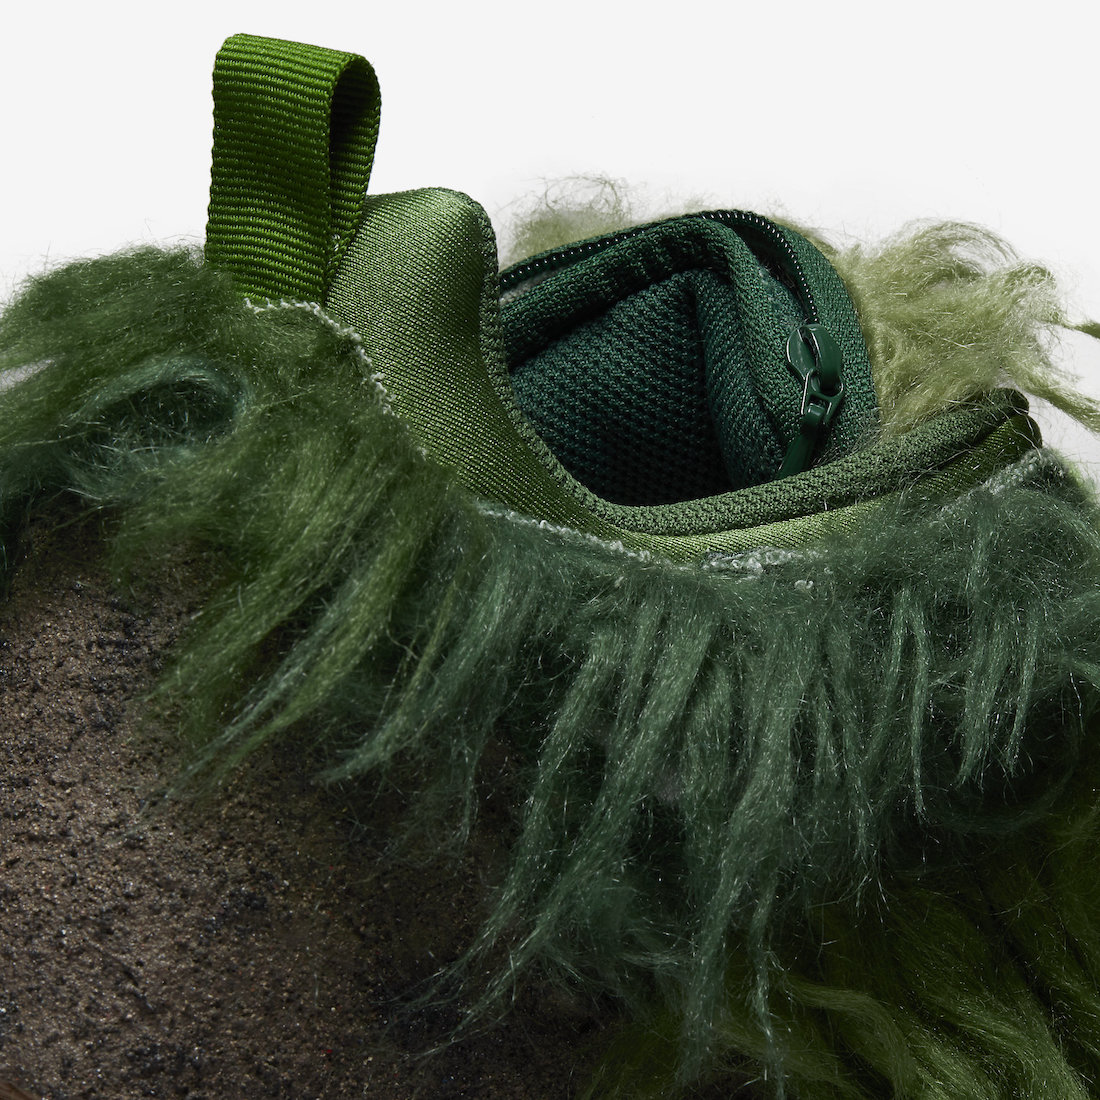 Nike CPFM Flea 1 Overgrown Grinch DQ5109-300 Release Date